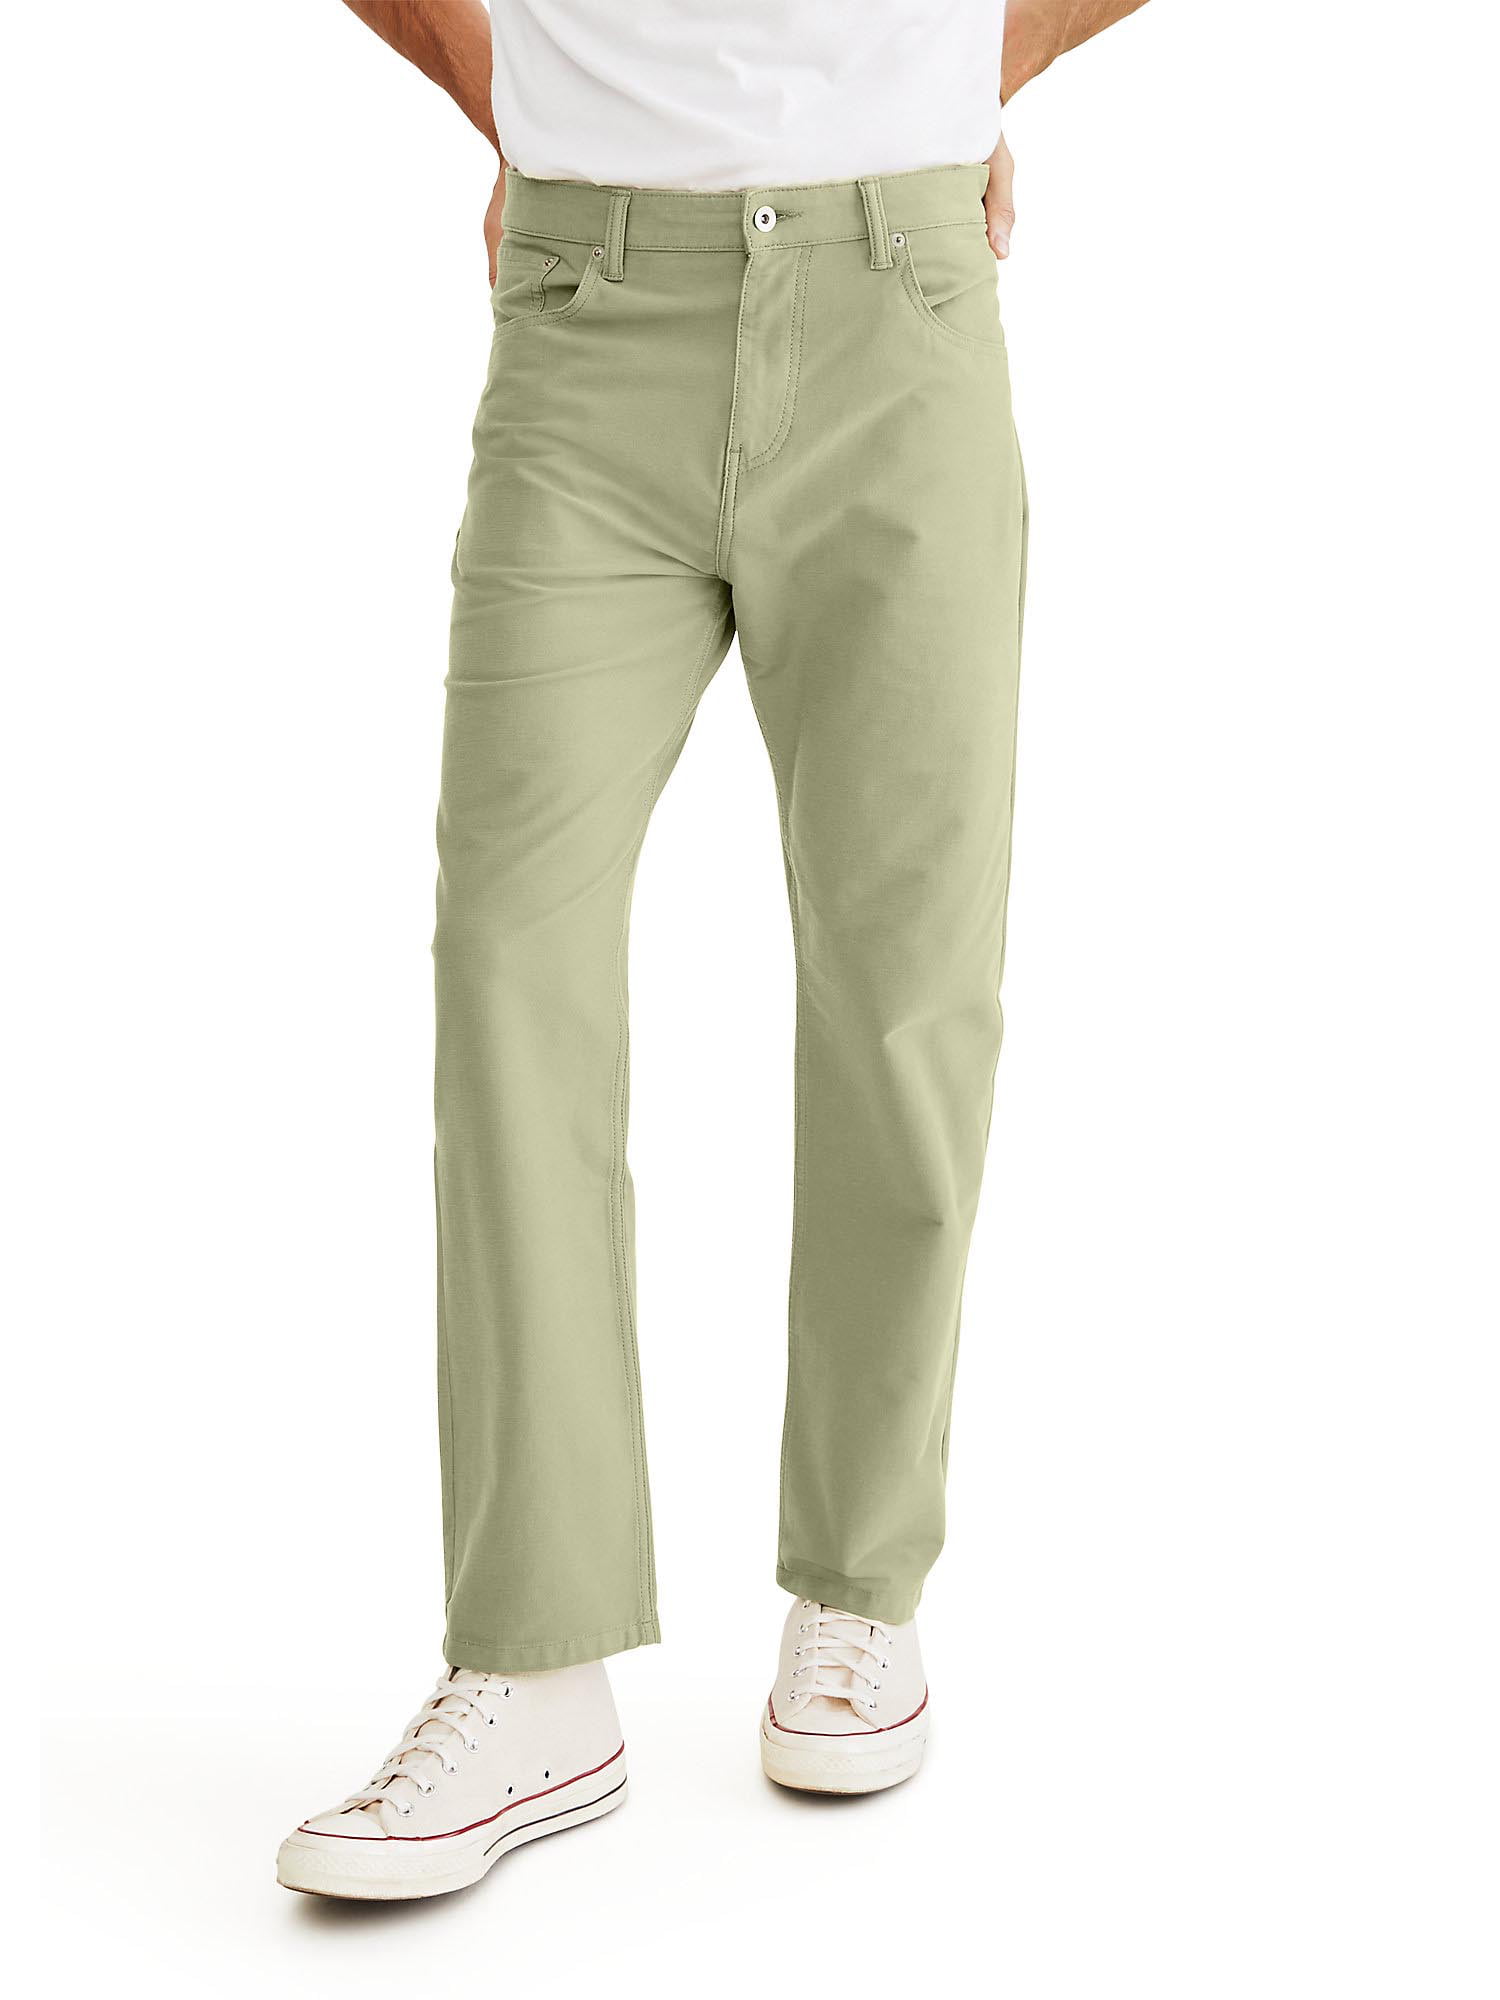 Dockers Men's Slim Fit Smart 360 Knit Comfort Cut Pants - Walmart.com